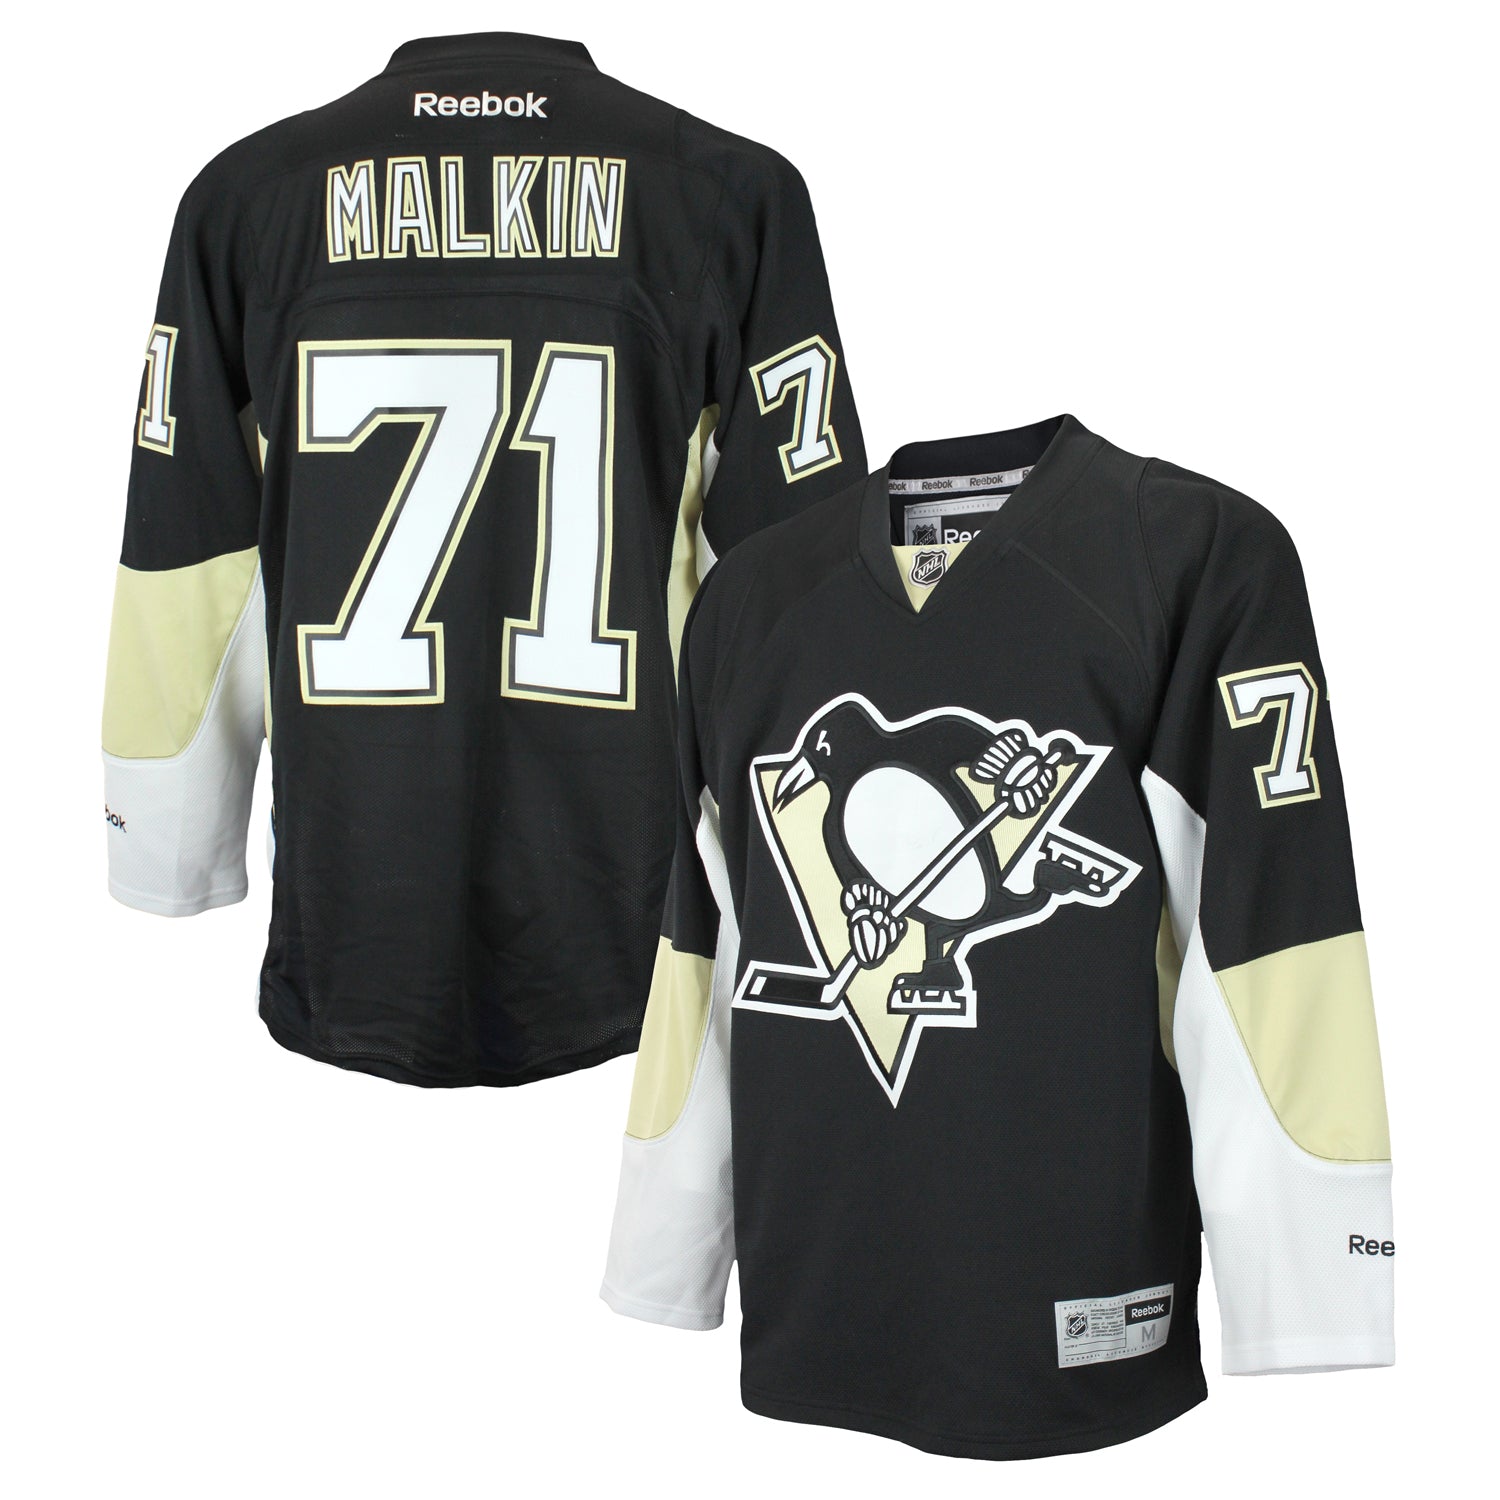 MALKIN Pittsburgh Penguins YOUTH Reebok Premier 7185 HOME Black